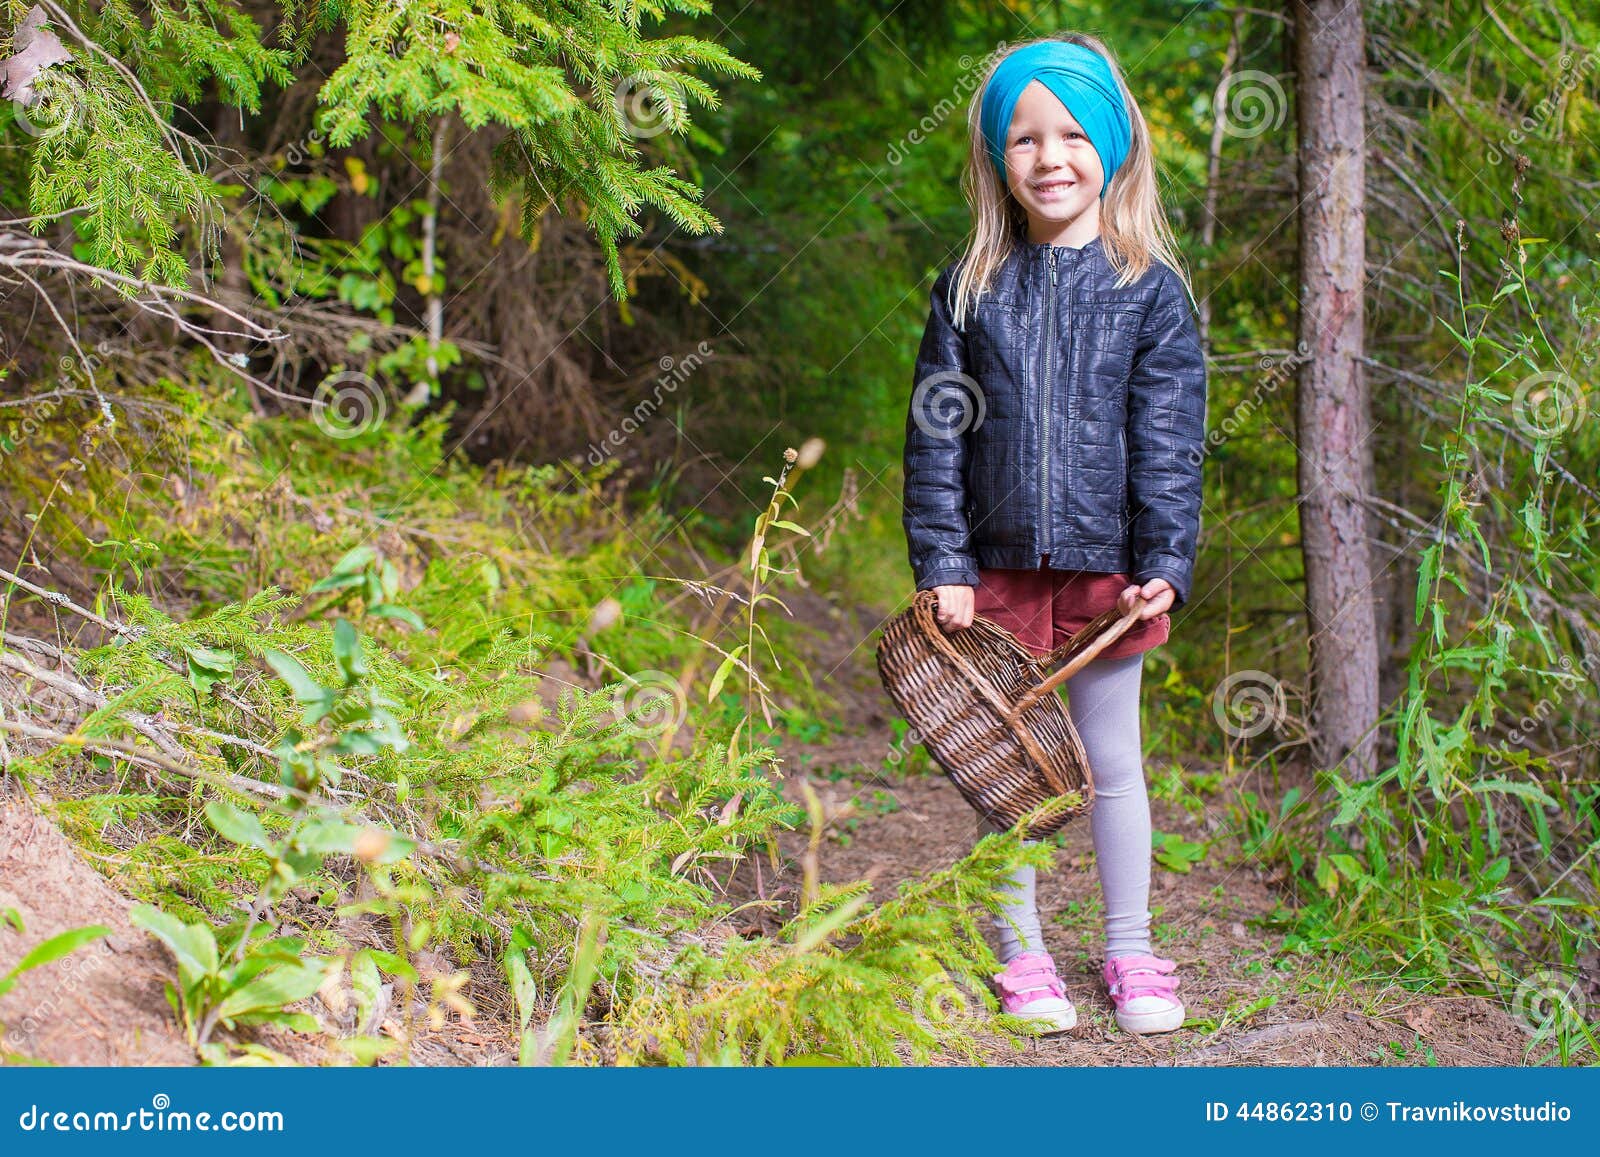 Включи девочку в лесу. Девочка корзинка лес. Девочка с корзинкой в лесу фото. Девочка гриб. Девочка одетая в лесу.